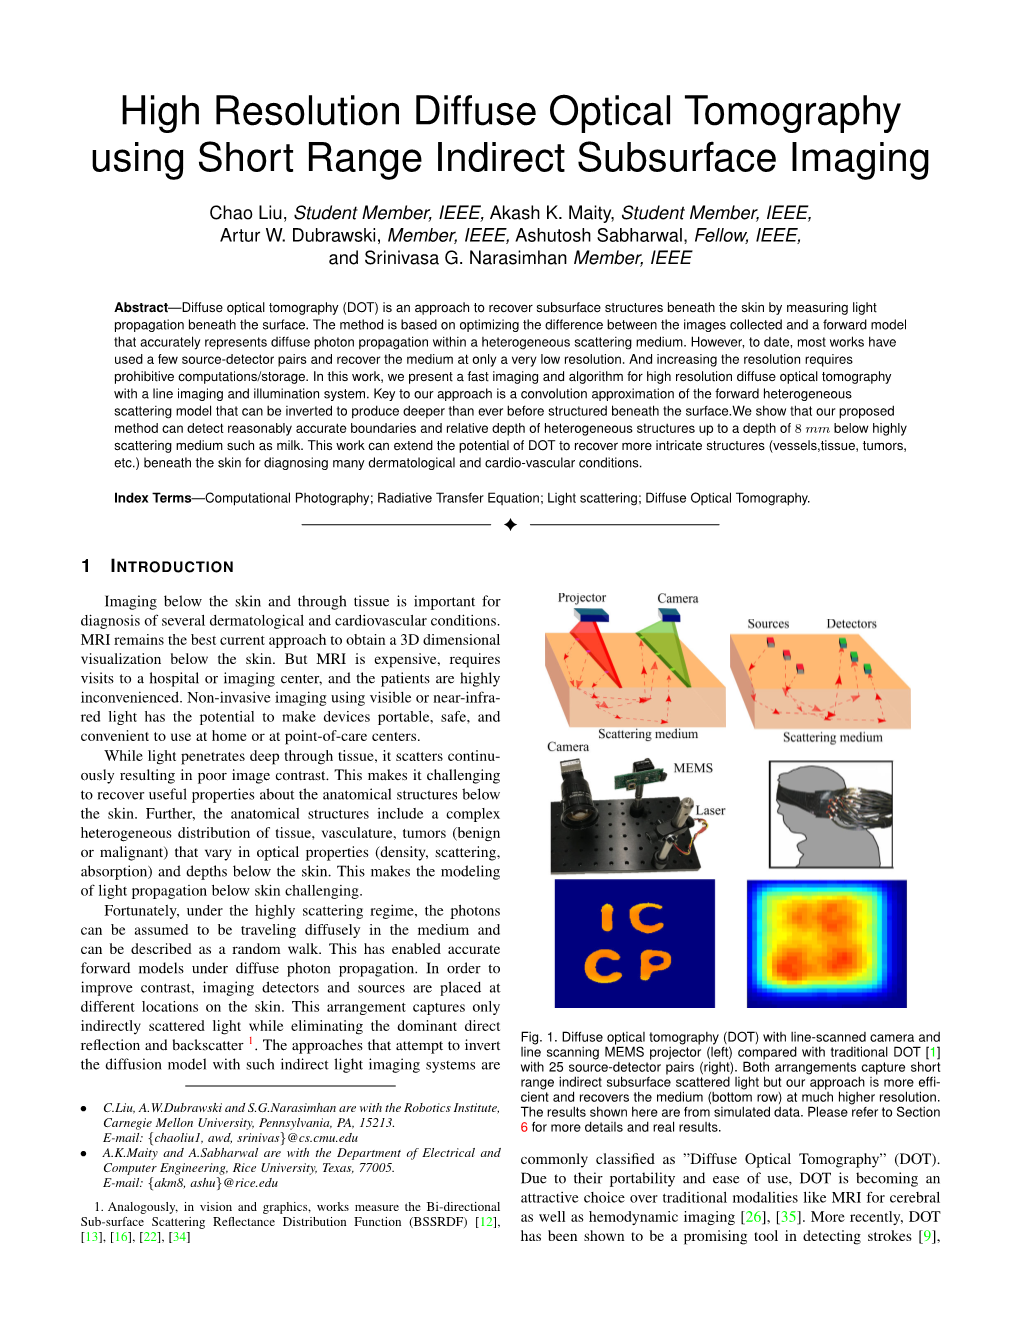 High Resolution Diffuse Optical Tomography Using Short Range Indirect Subsurface Imaging